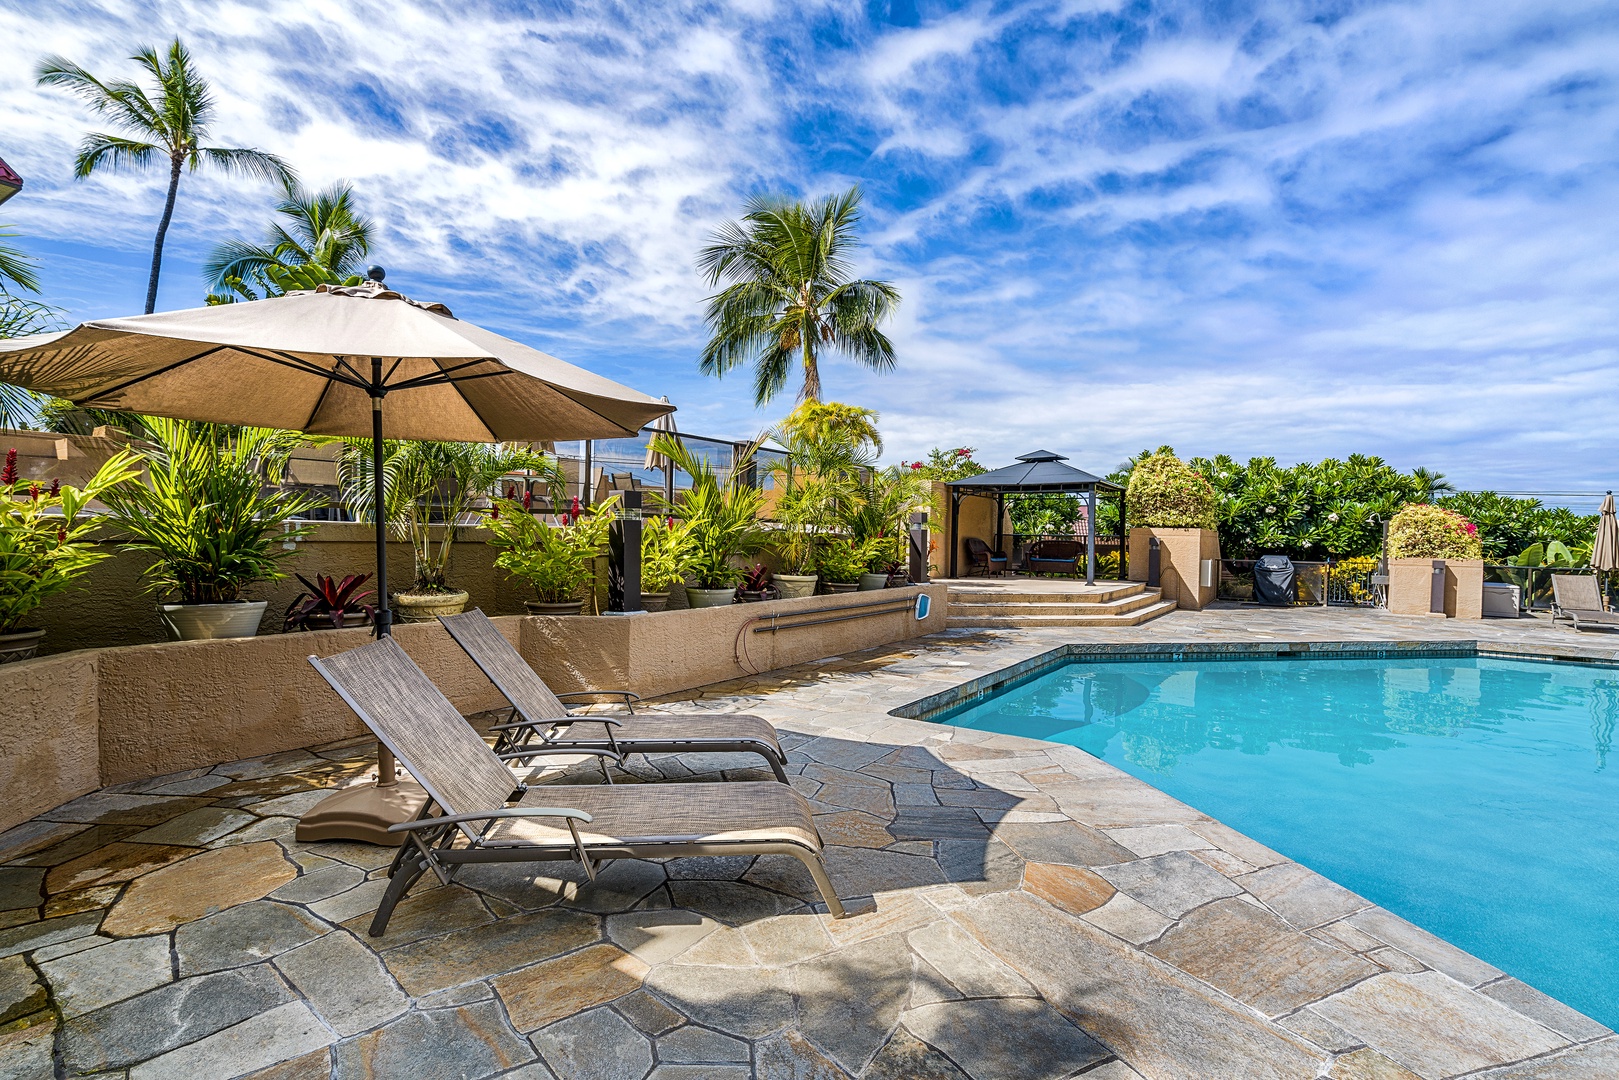 Kailua Kona Vacation Rentals, Kona Pacific B310 - Lounge pool side to work on your tan!